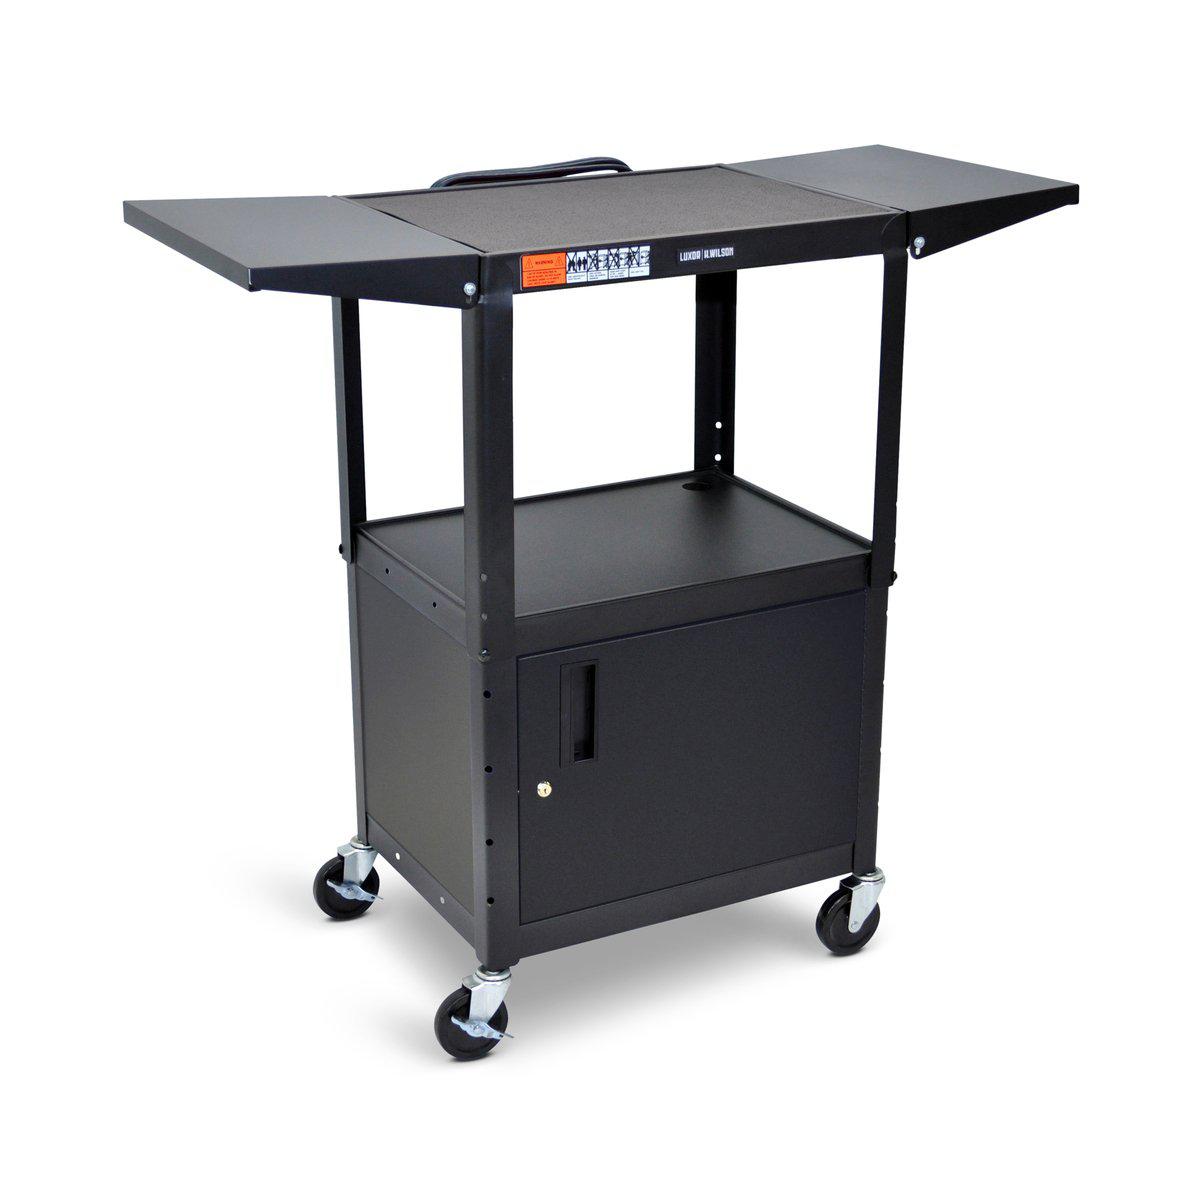 Adjustable-Height Steel AV Cart with Cabinet and Drop Leaf Shelves